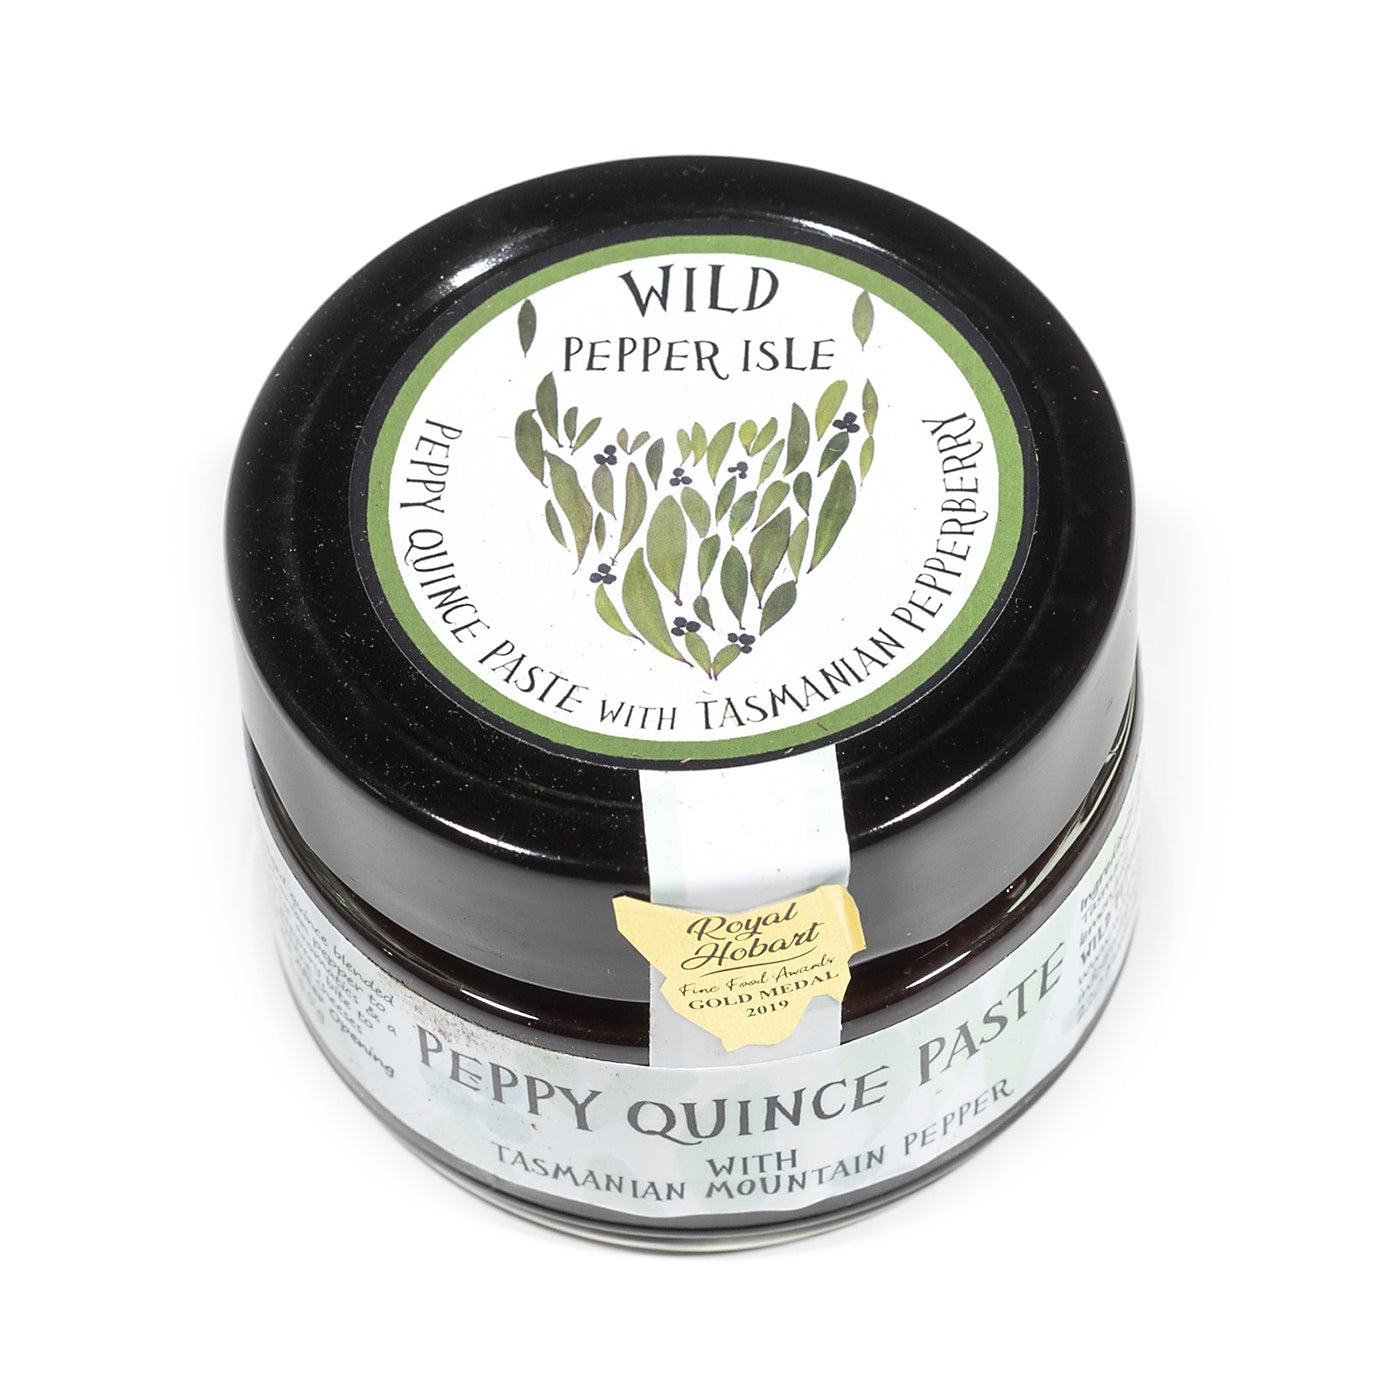 Wild Pepper Isle - Peppy Quince Paste